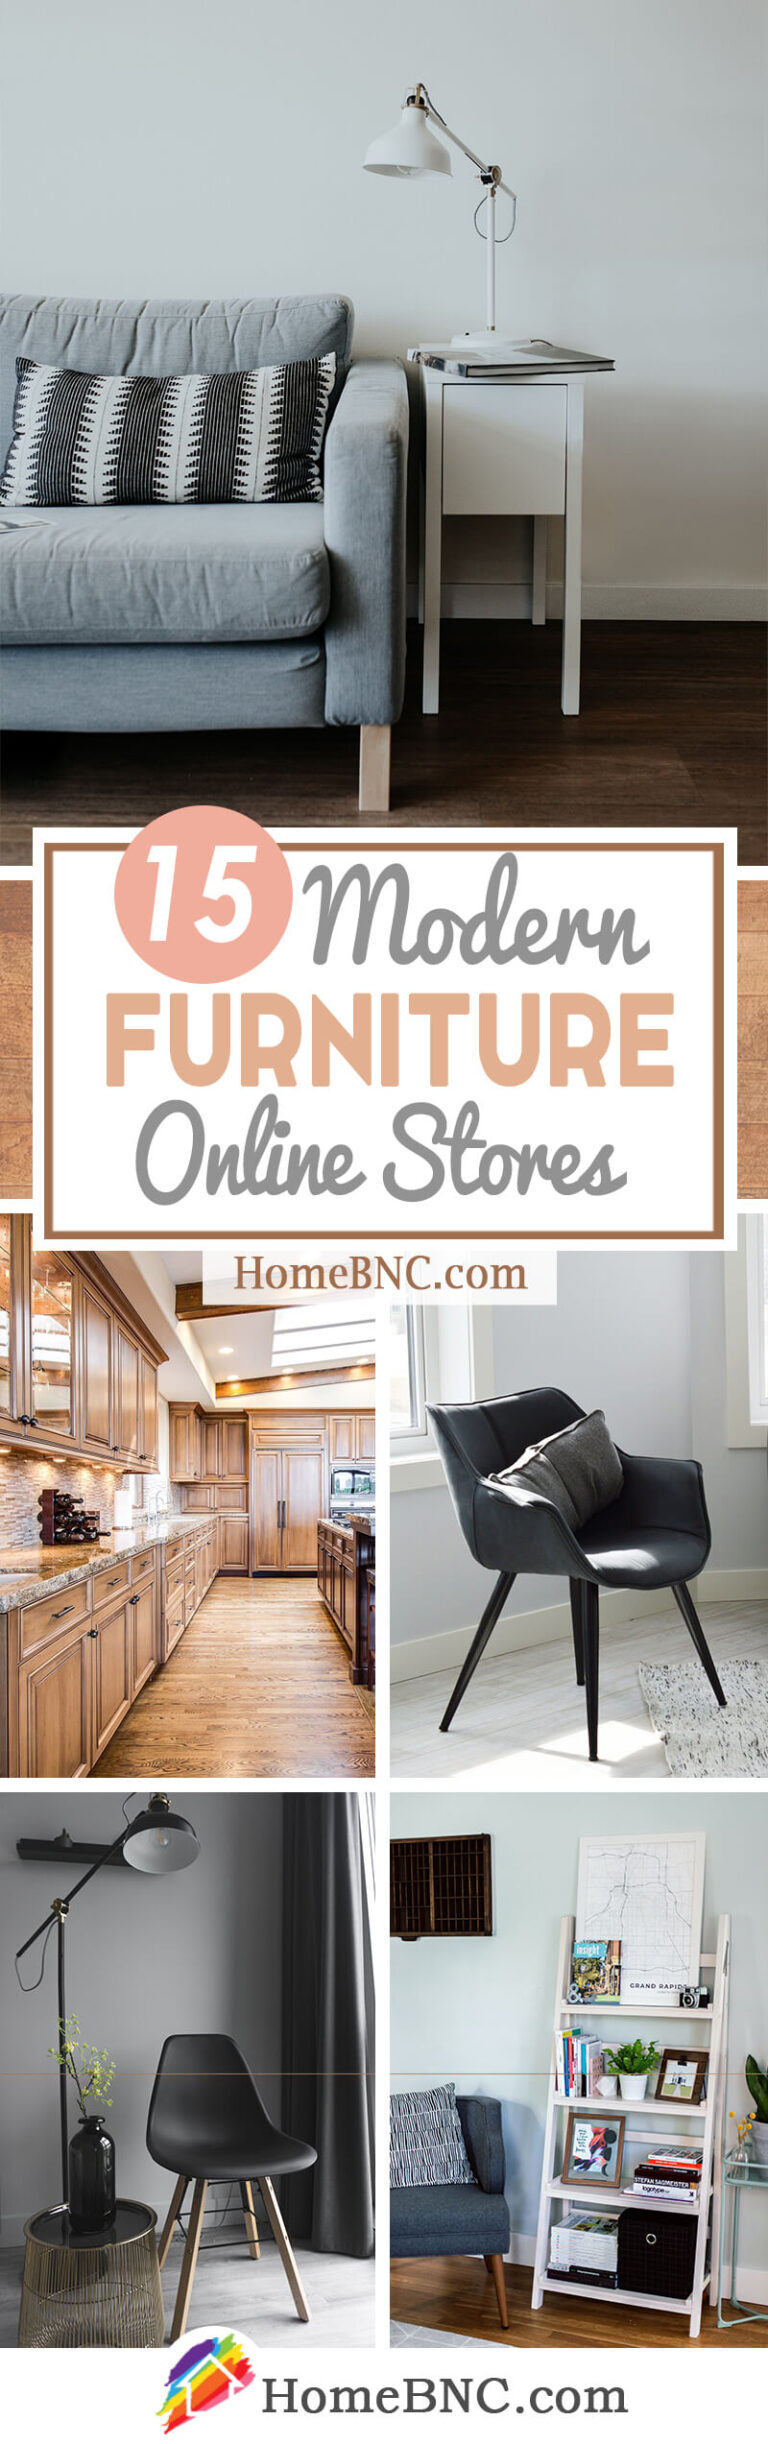 Modern Furniture Stores Pinterest Share Homebnc 768x2444 